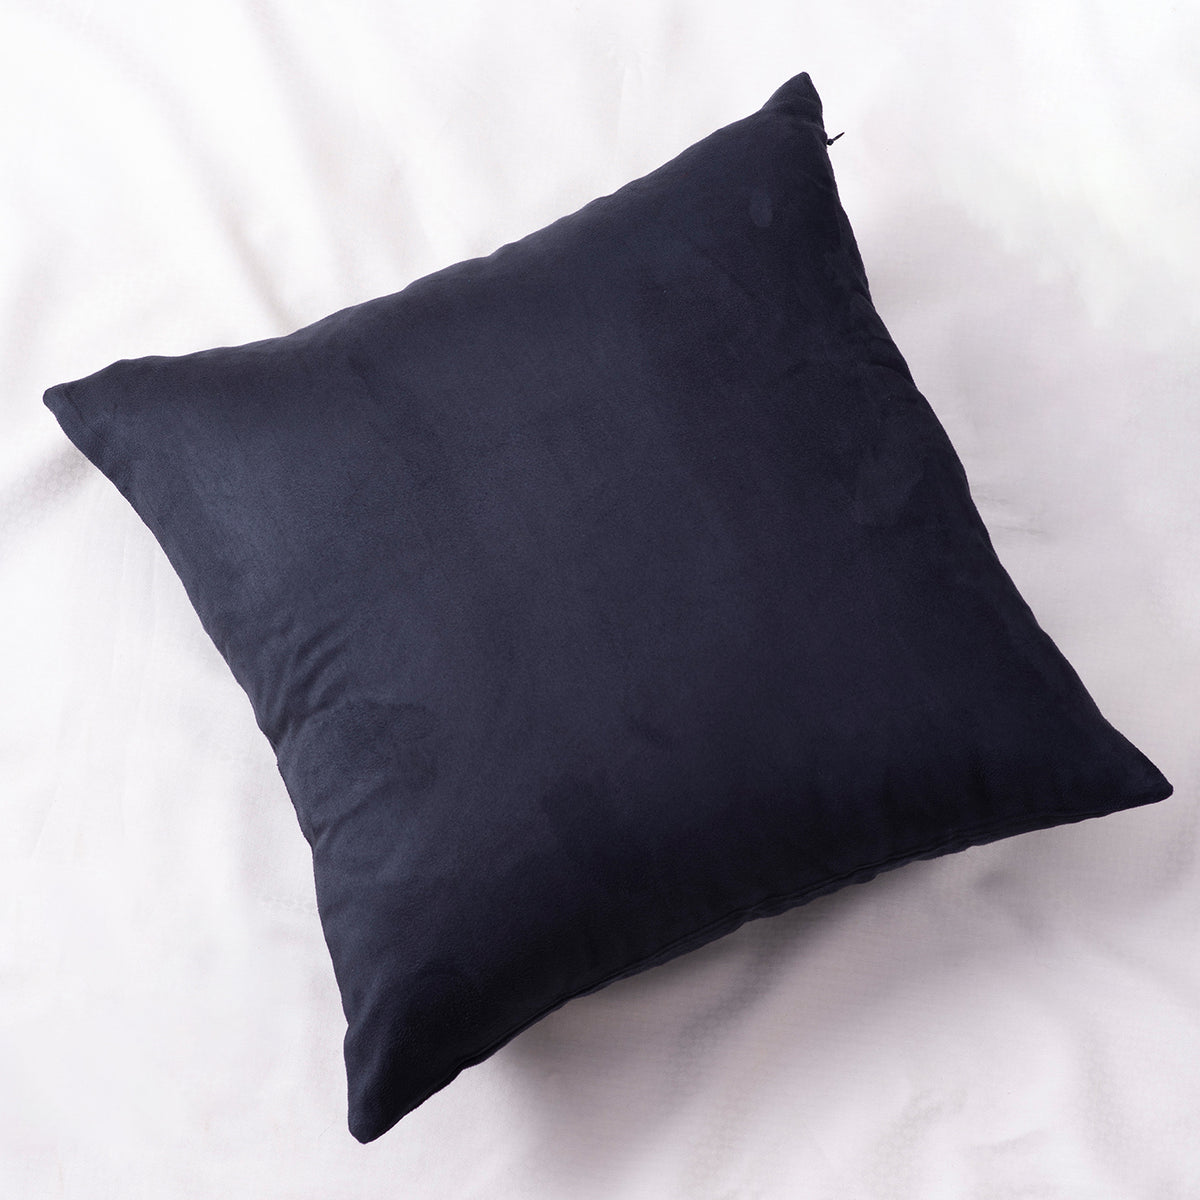 Lush Velvet Cushion Cover Blue 16 X 16 Inches Set of 5